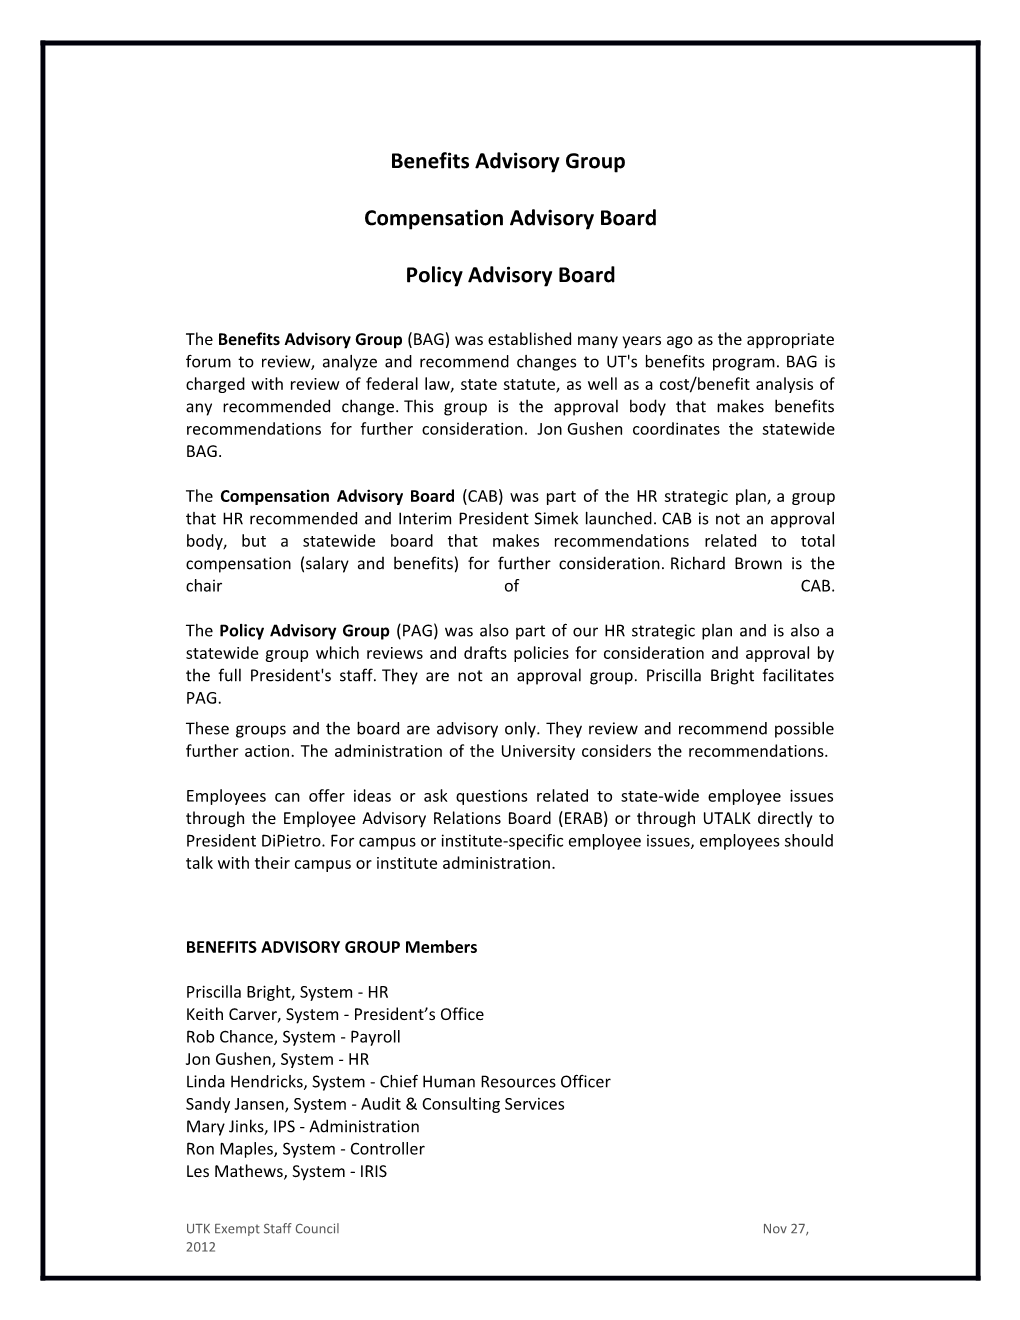 Benefits Advisory Group Compensation Advisory Board Policy Advisory Board